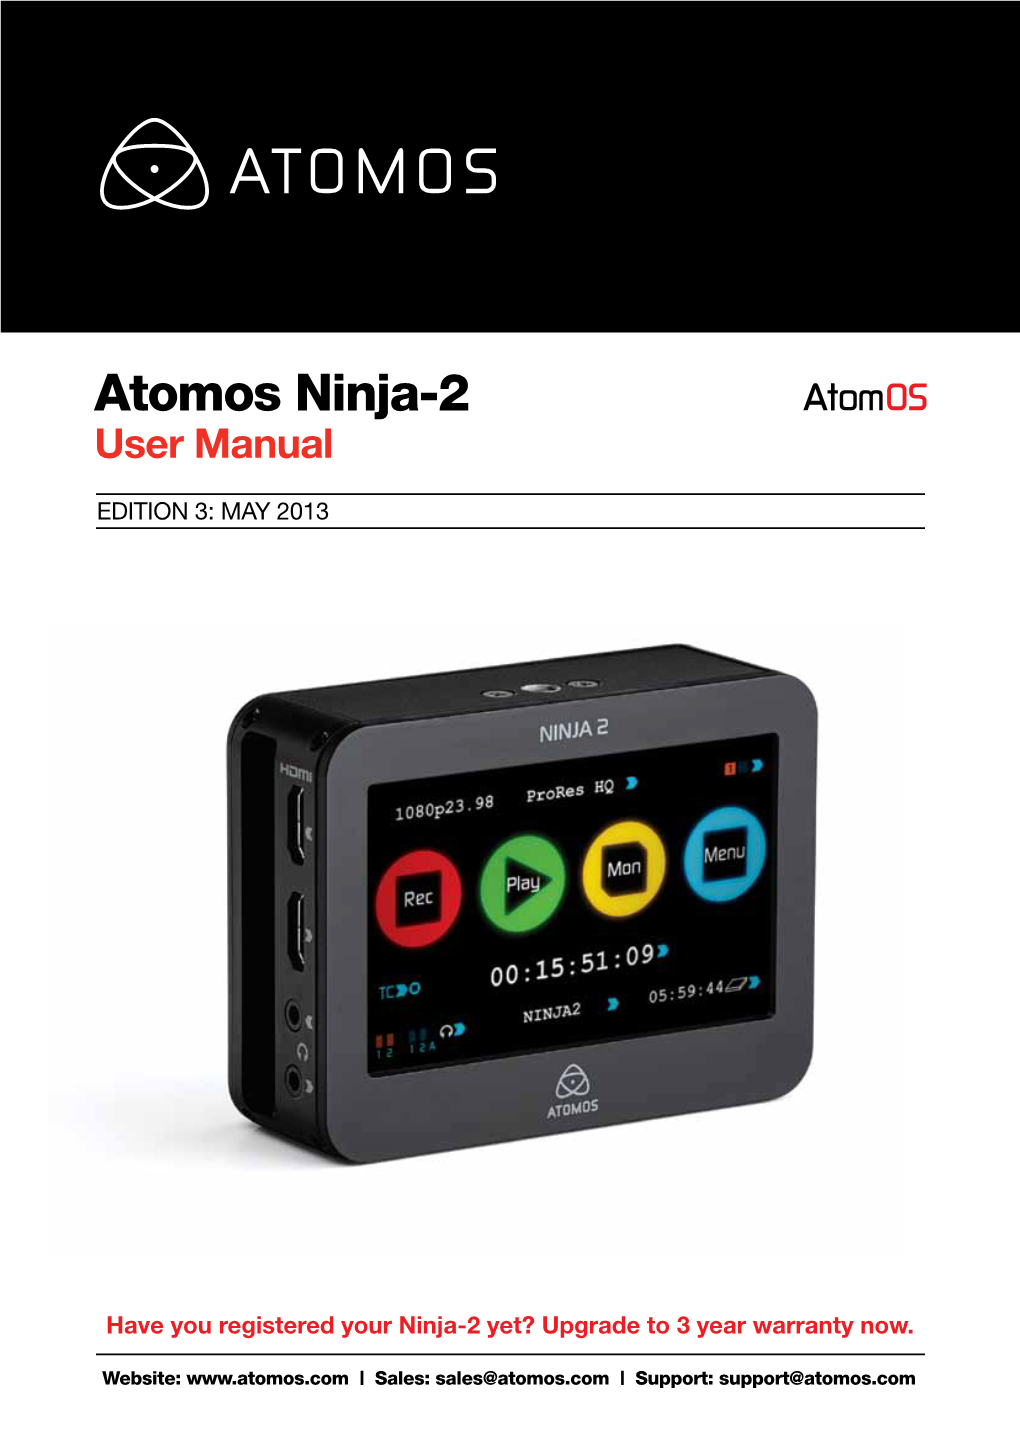 Atomos Ninja-2 User Manual